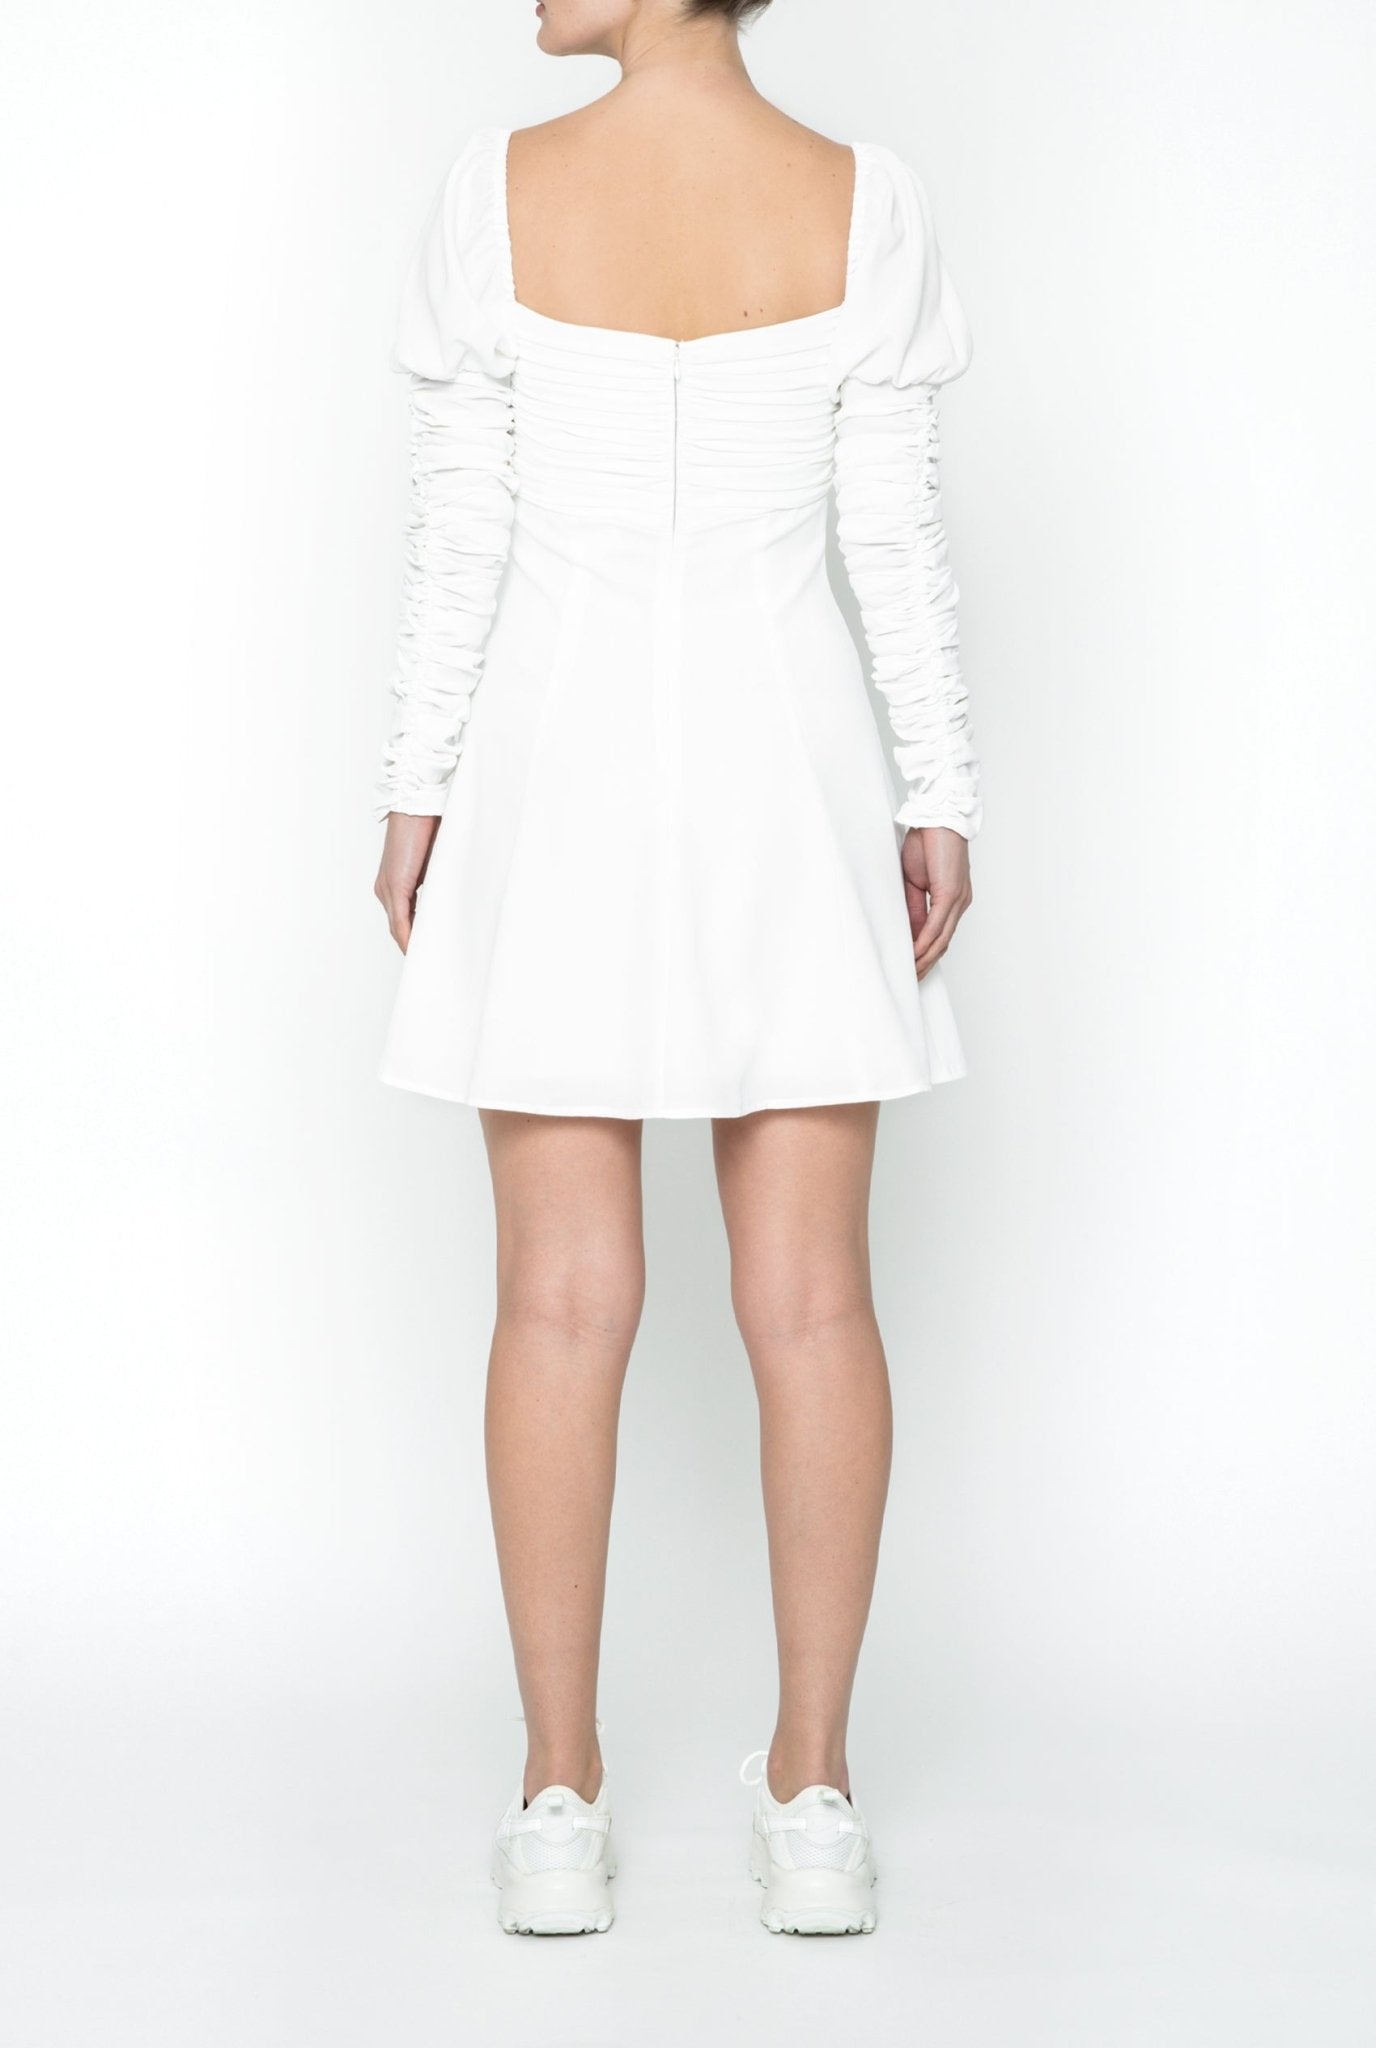 Melbourne Dress in White - BOSKEMPER